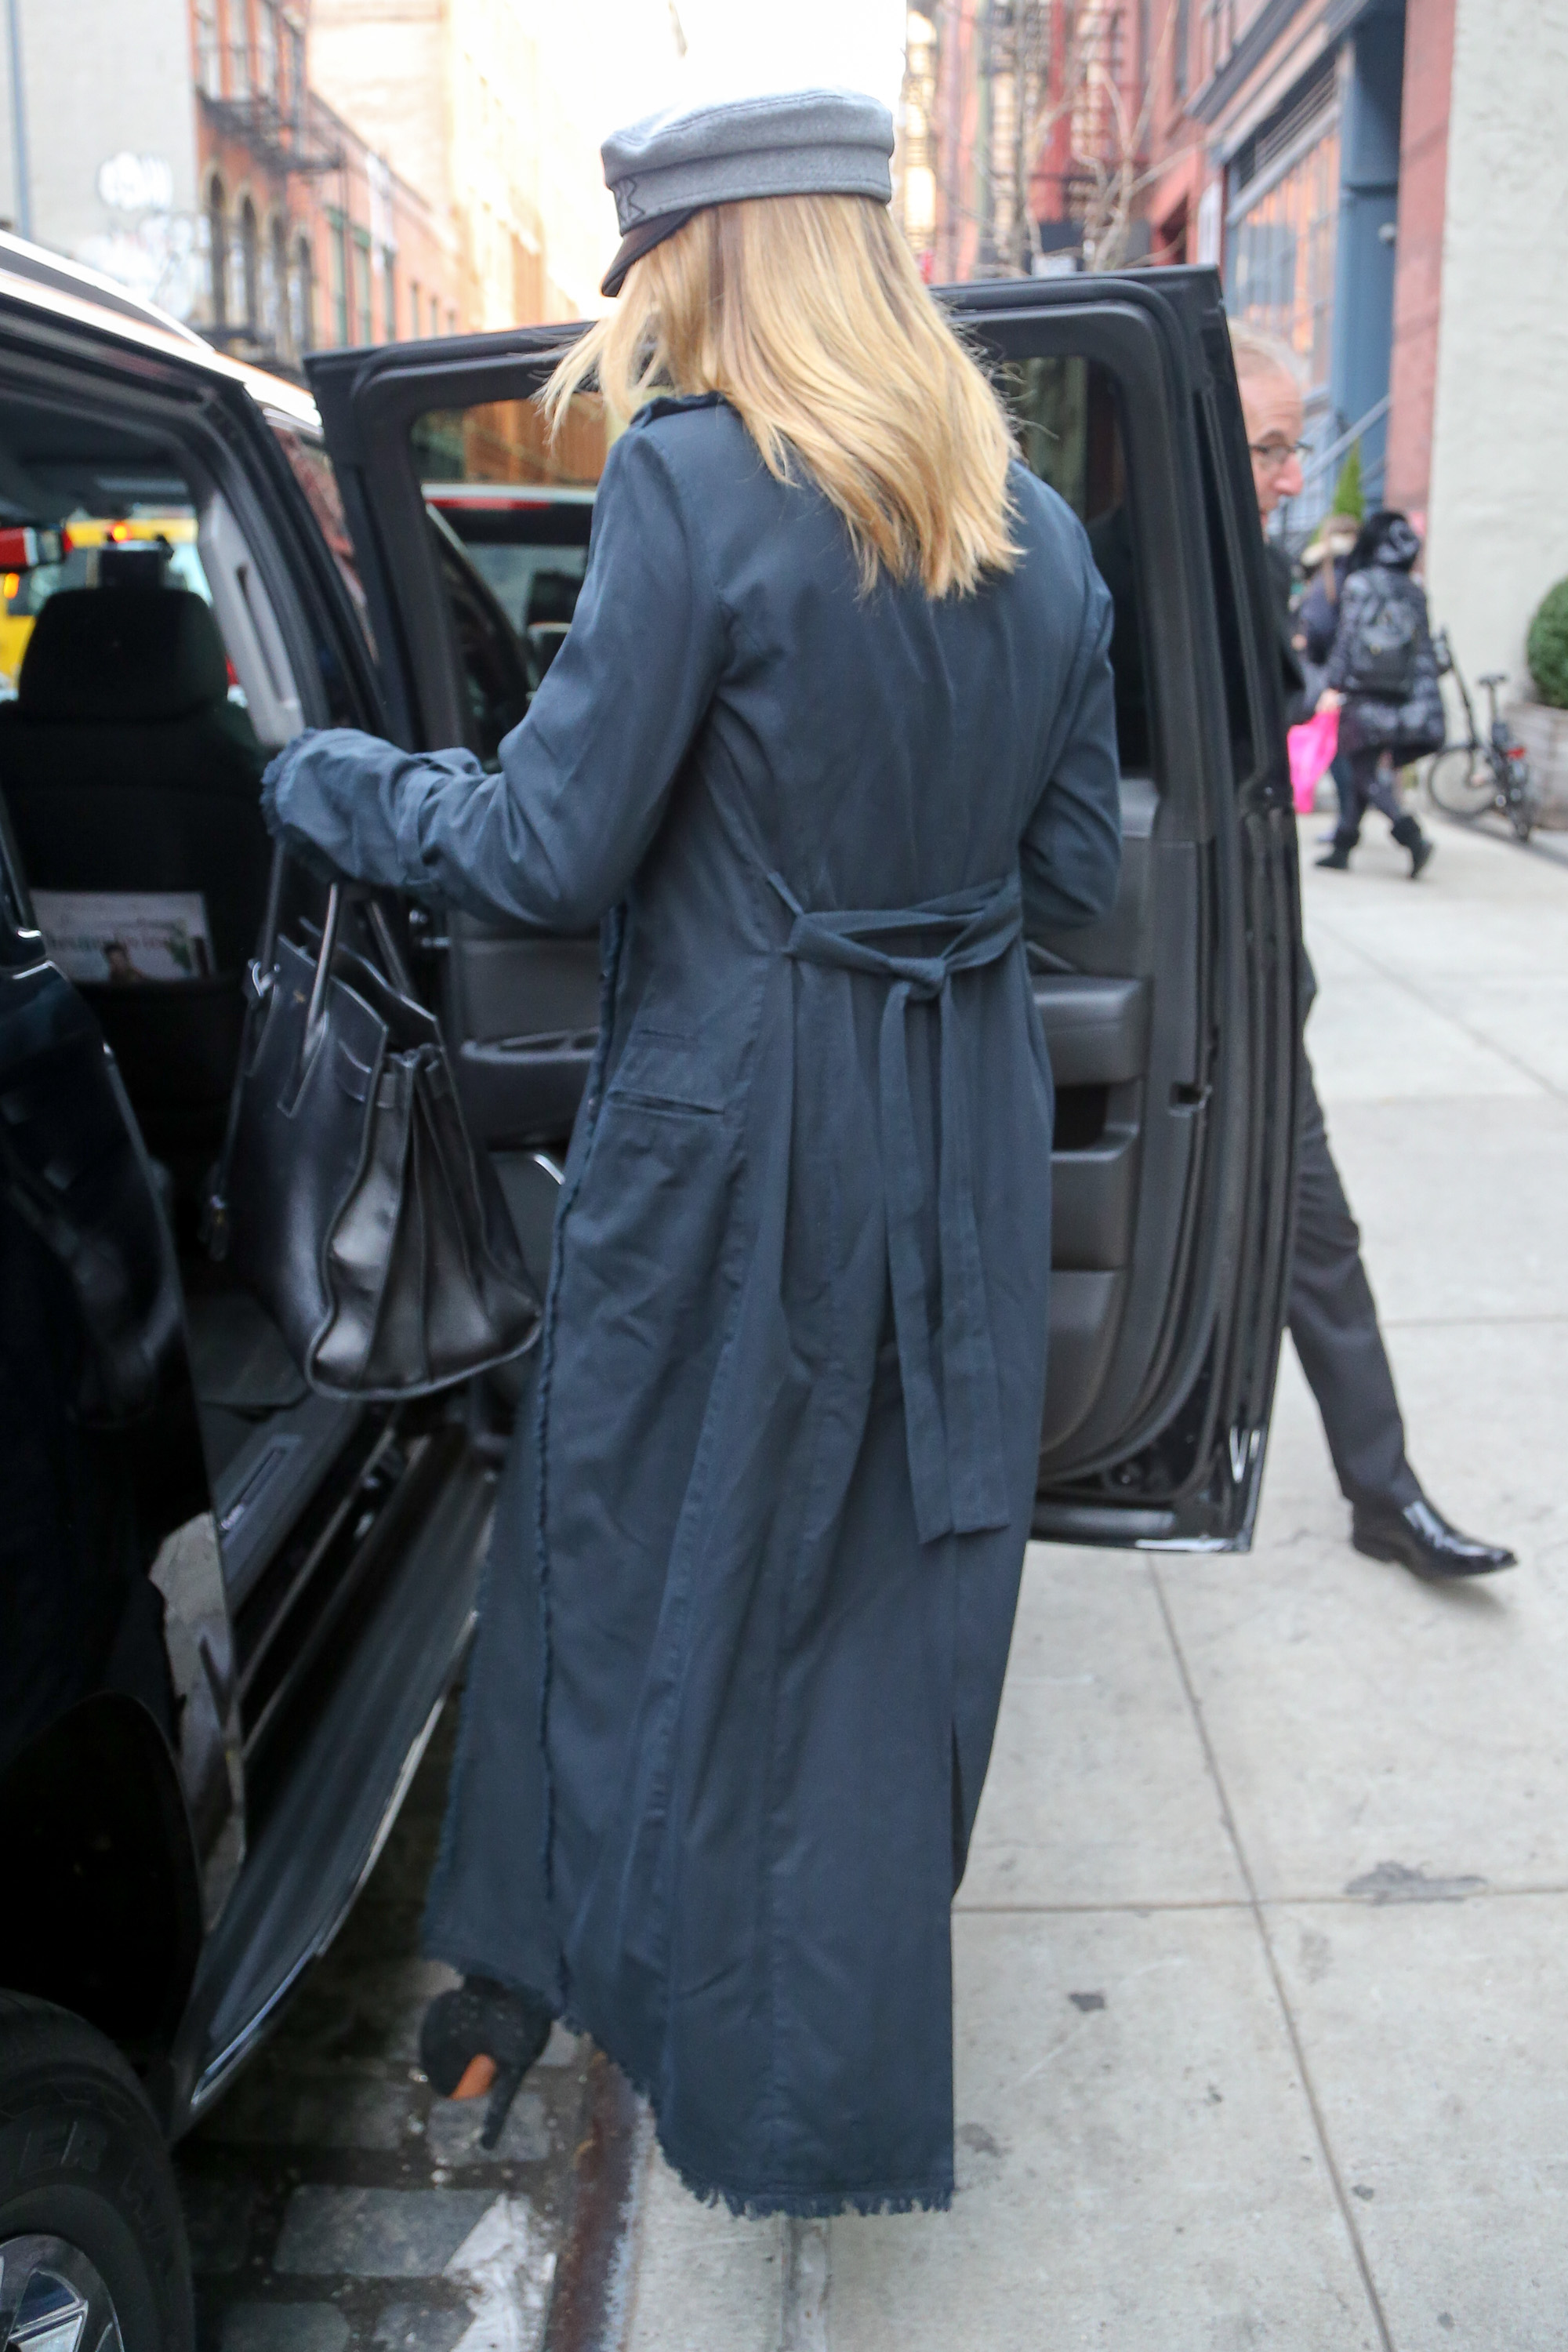 Rosie Huntington-Whiteley leaving her hotel